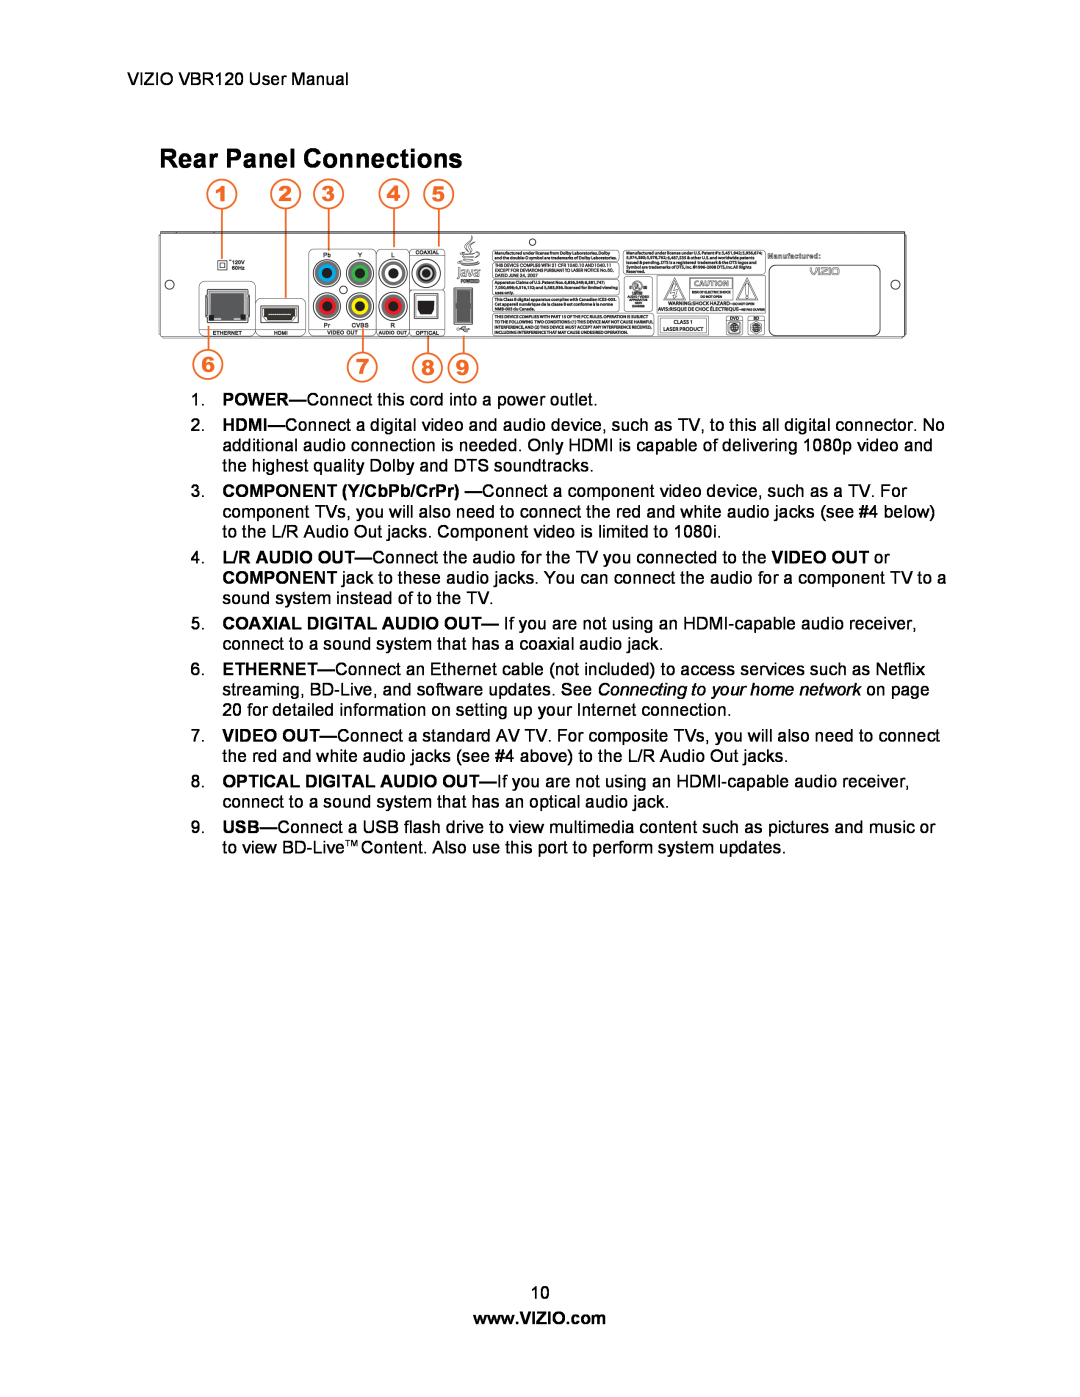 Vizio VBR 120 user manual Rear Panel Connections 